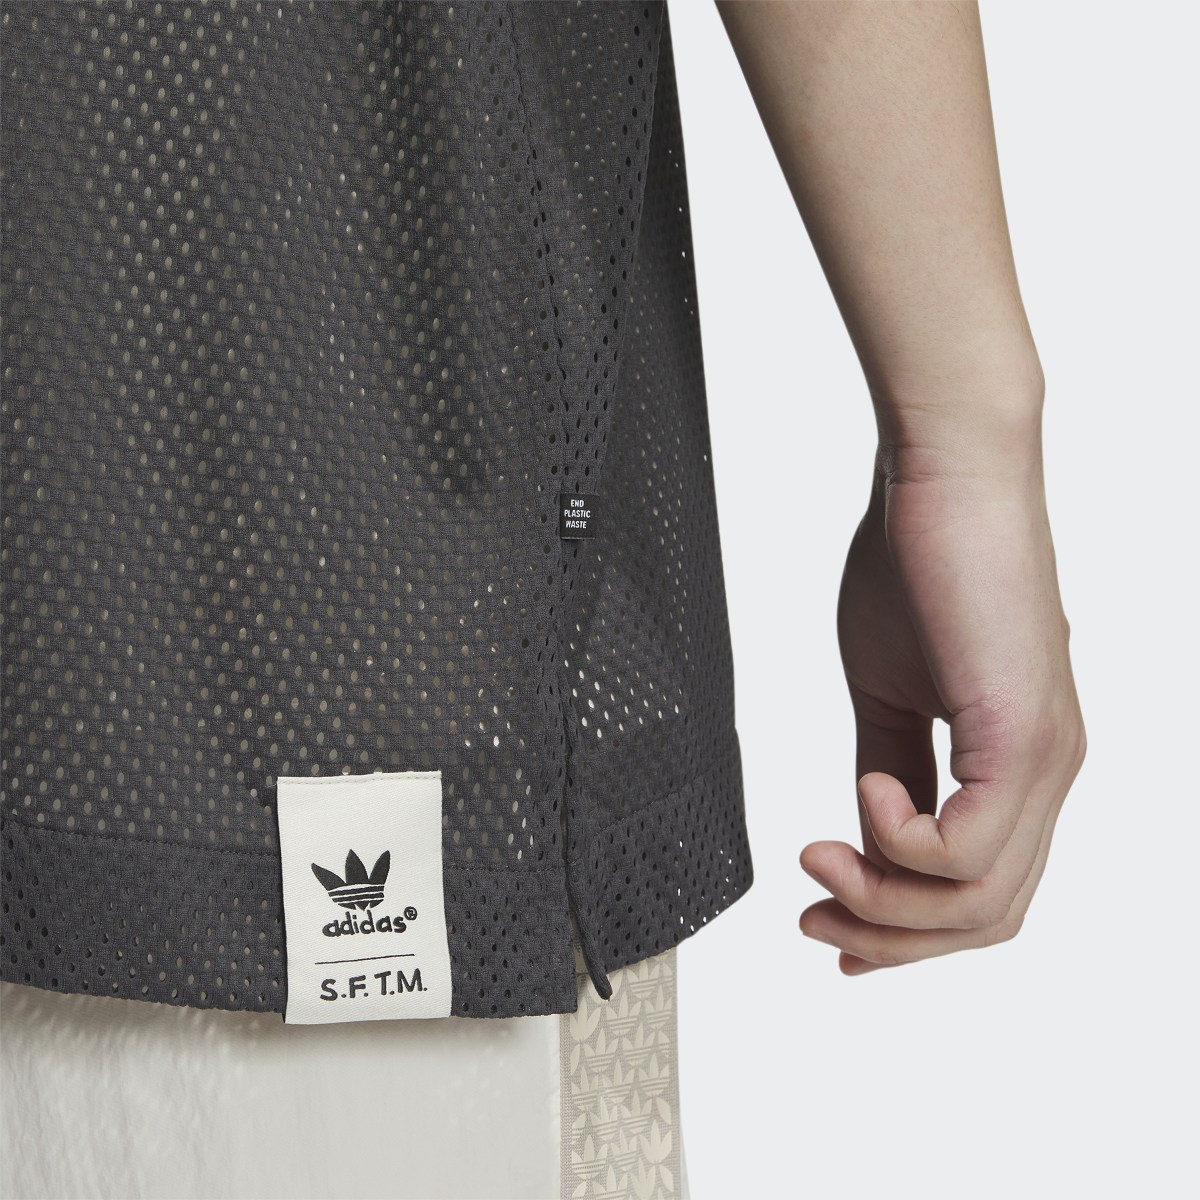 Adidas Koszula SFTM Short Sleeve (Gender Neutral). 6